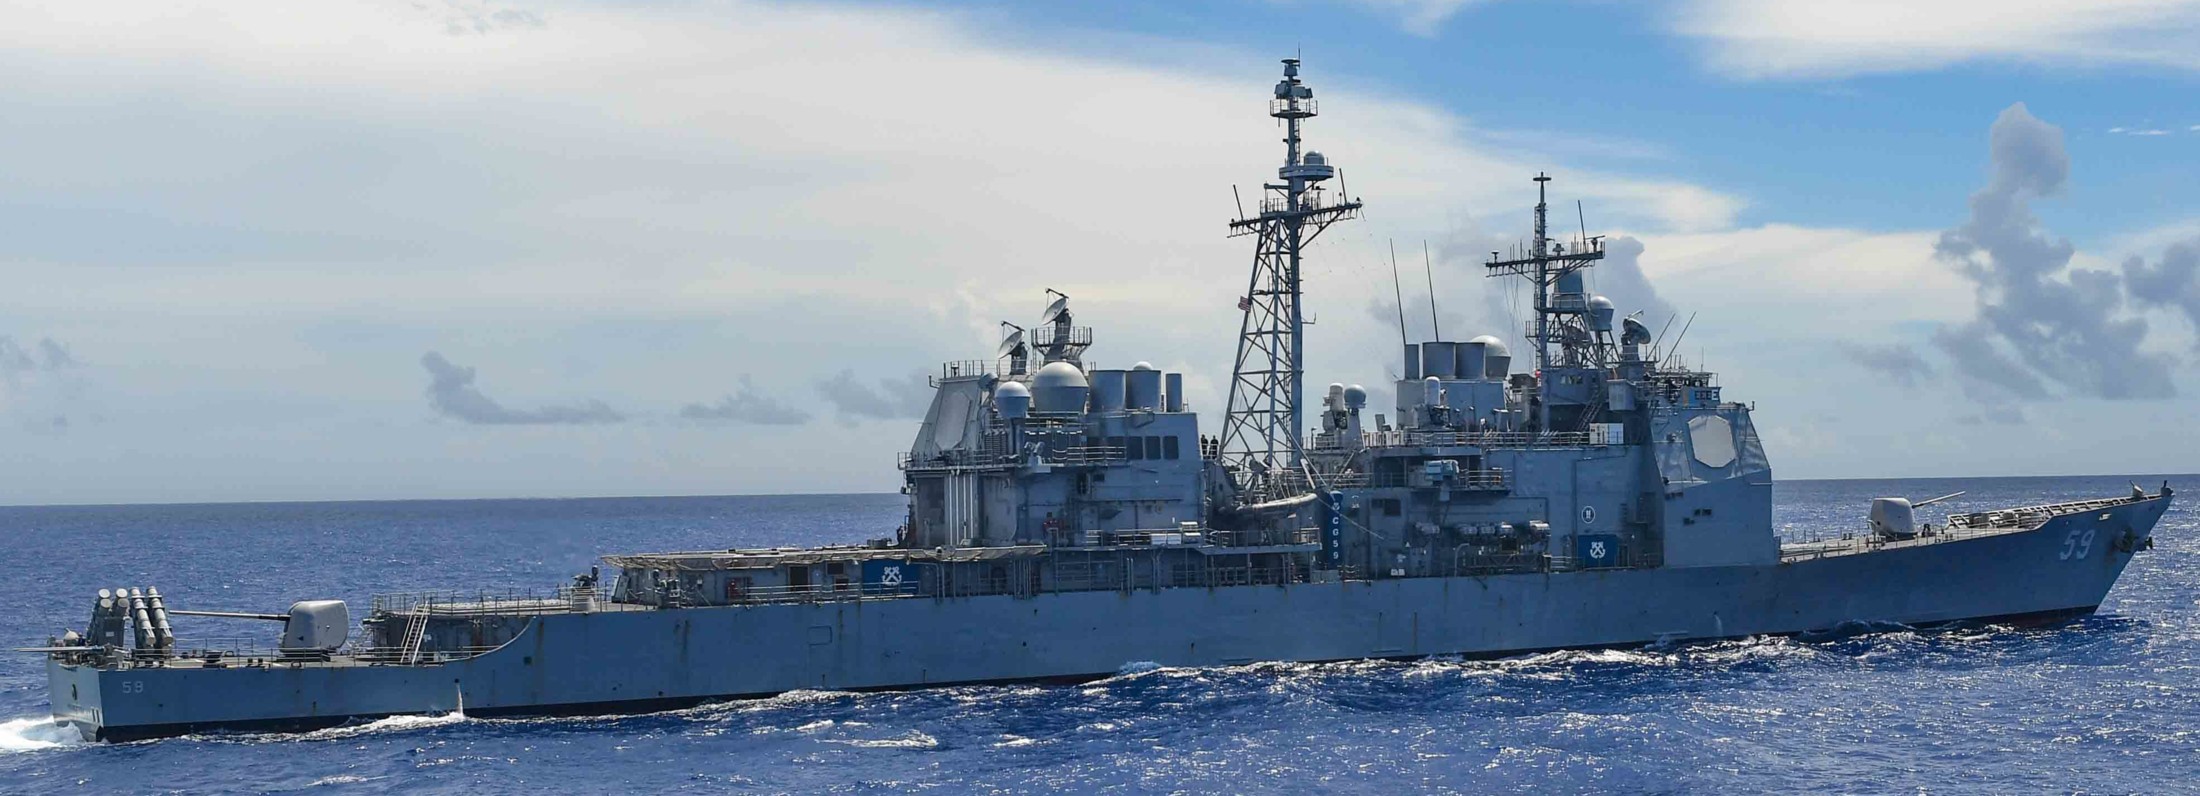 cg-59 uss princeton ticonderoga class guided missile cruiser aegis us navy off guam 76